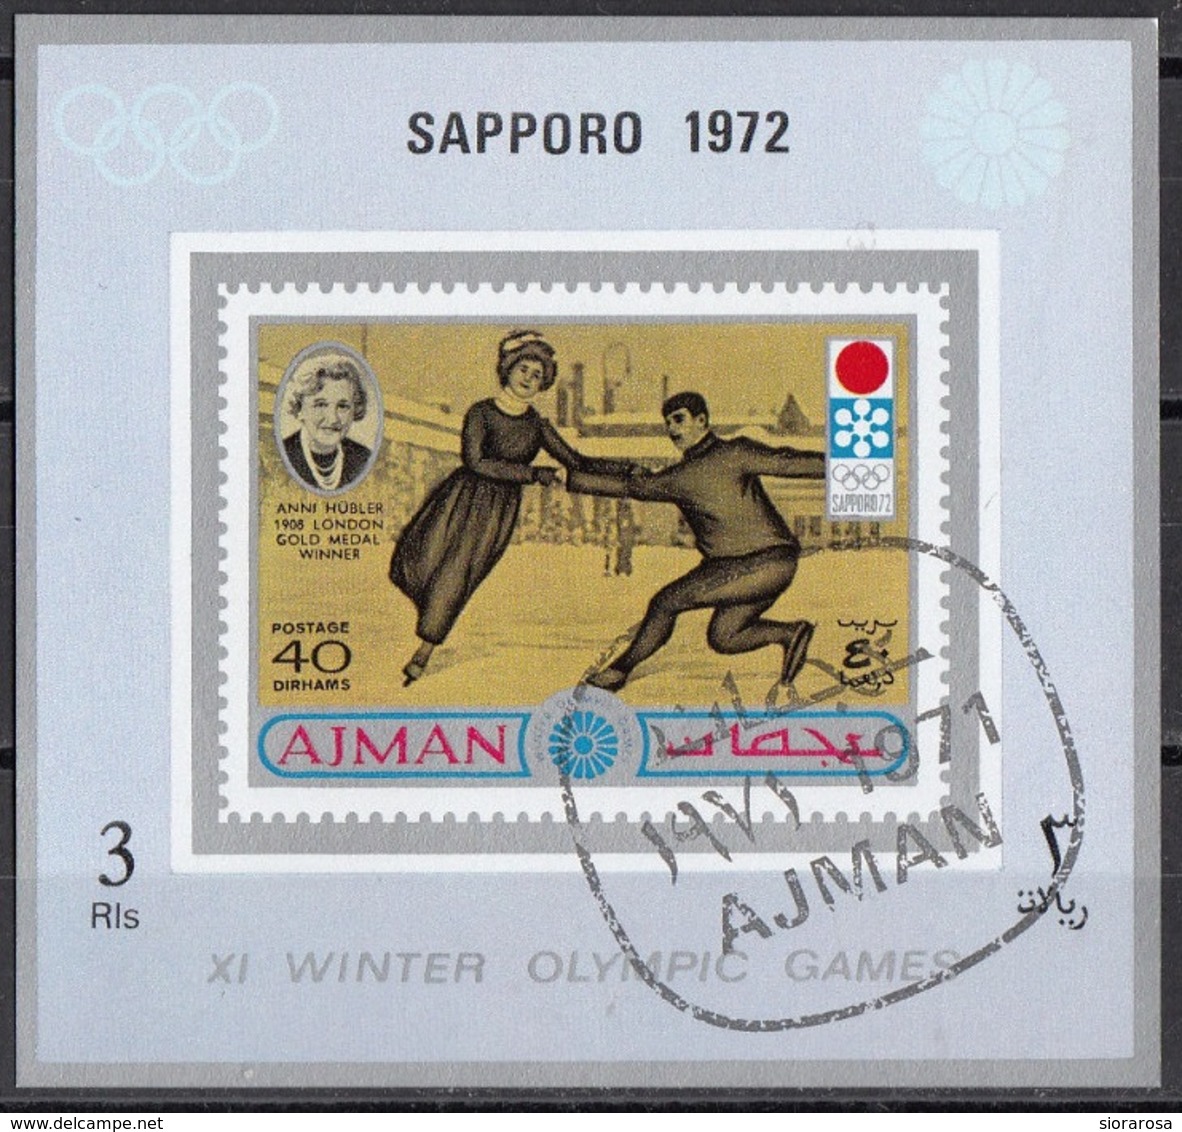 Ajman 1971 Mi. 763B Anna Hubler Oro Londra 1908 Pattinaggio (Sapporo '72) Sheet Nuovo CTO - Figure Skating